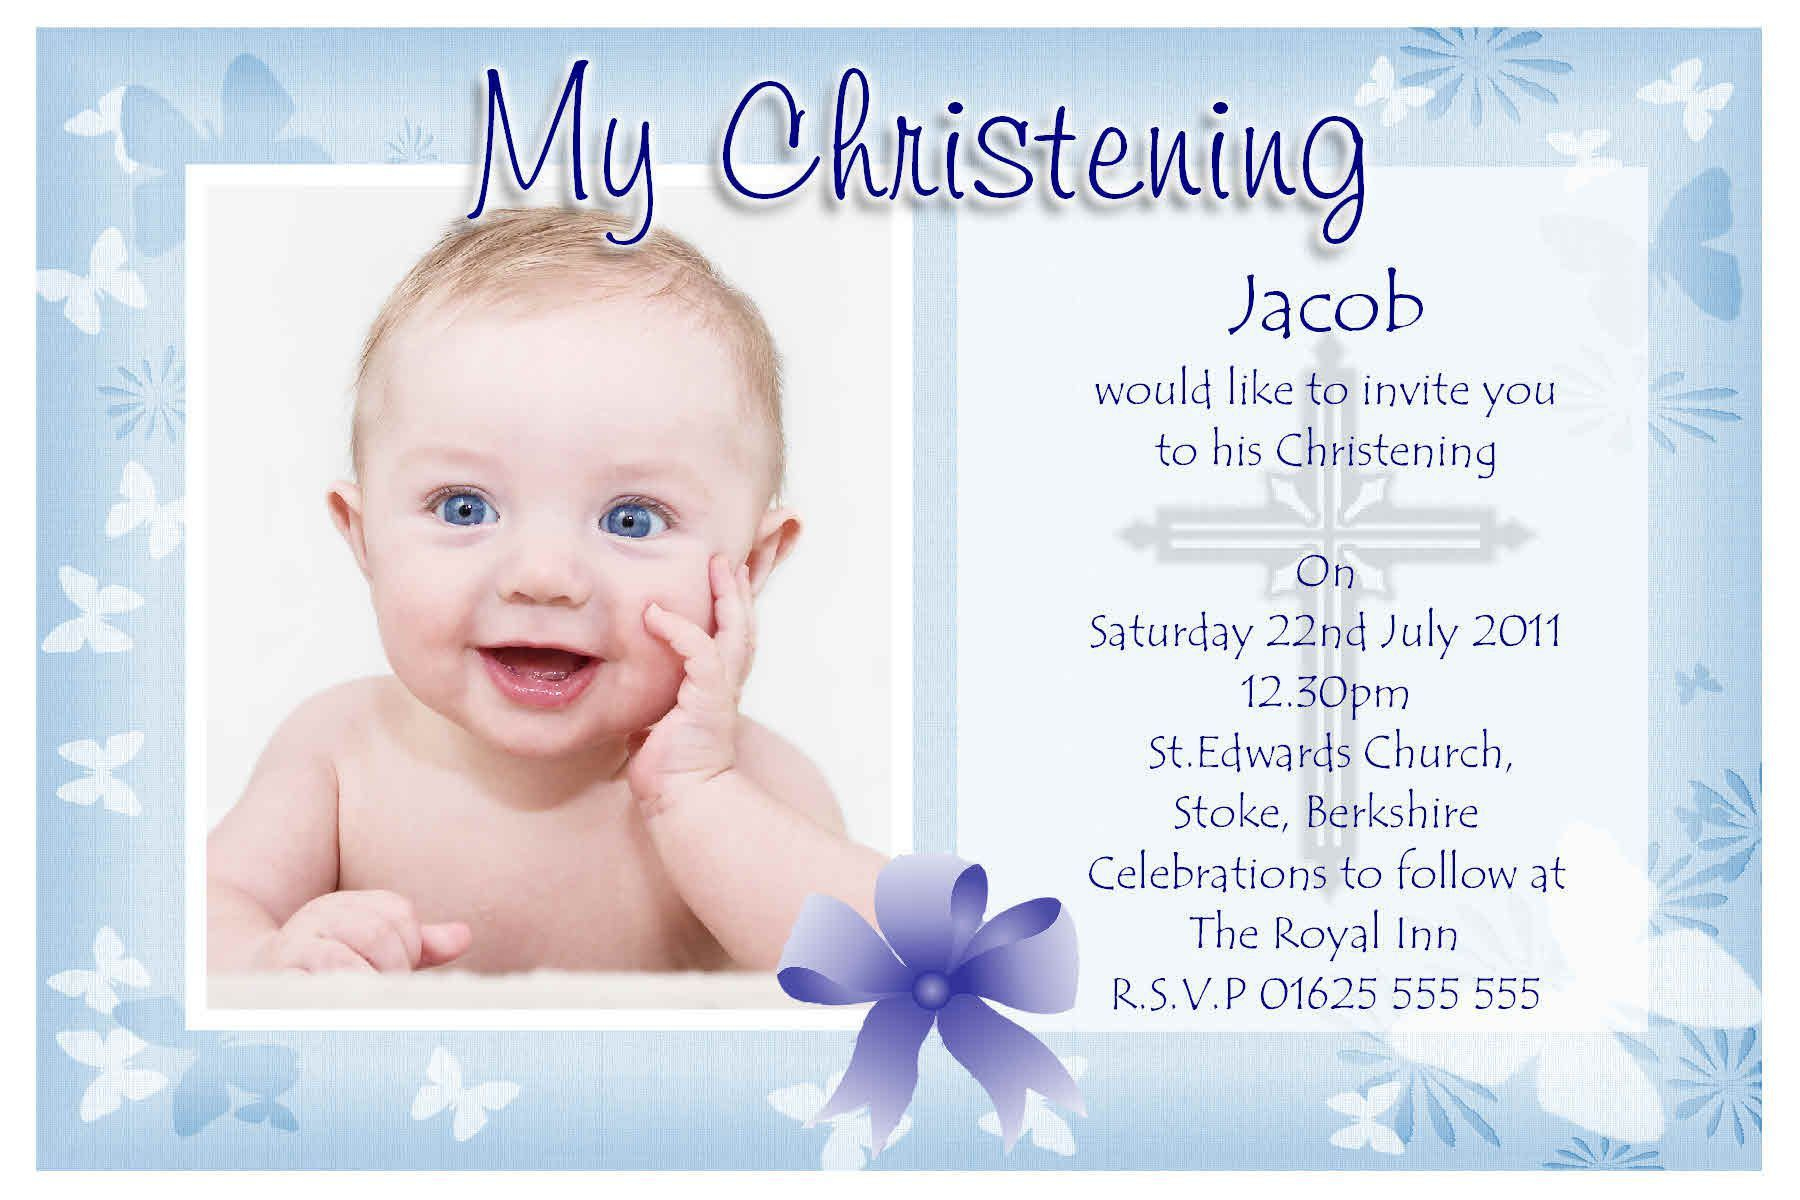 Invitation Card For Christening : Invitation Card For with regard to Blank Christening Invitation Templates